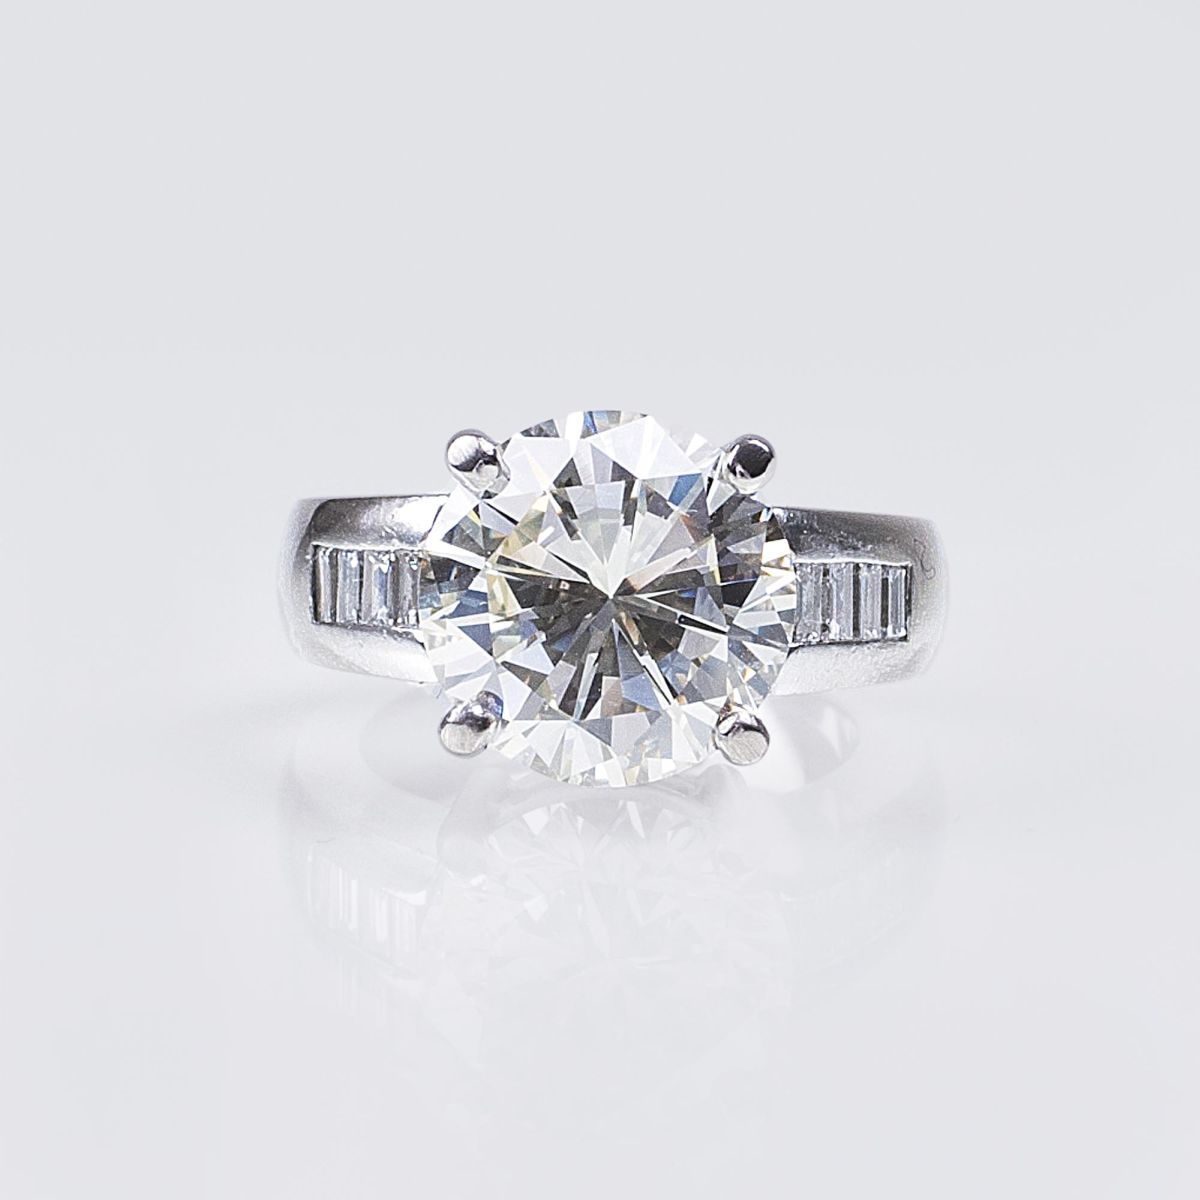 An extraordinary highcarat Solitaire Diamond Ring